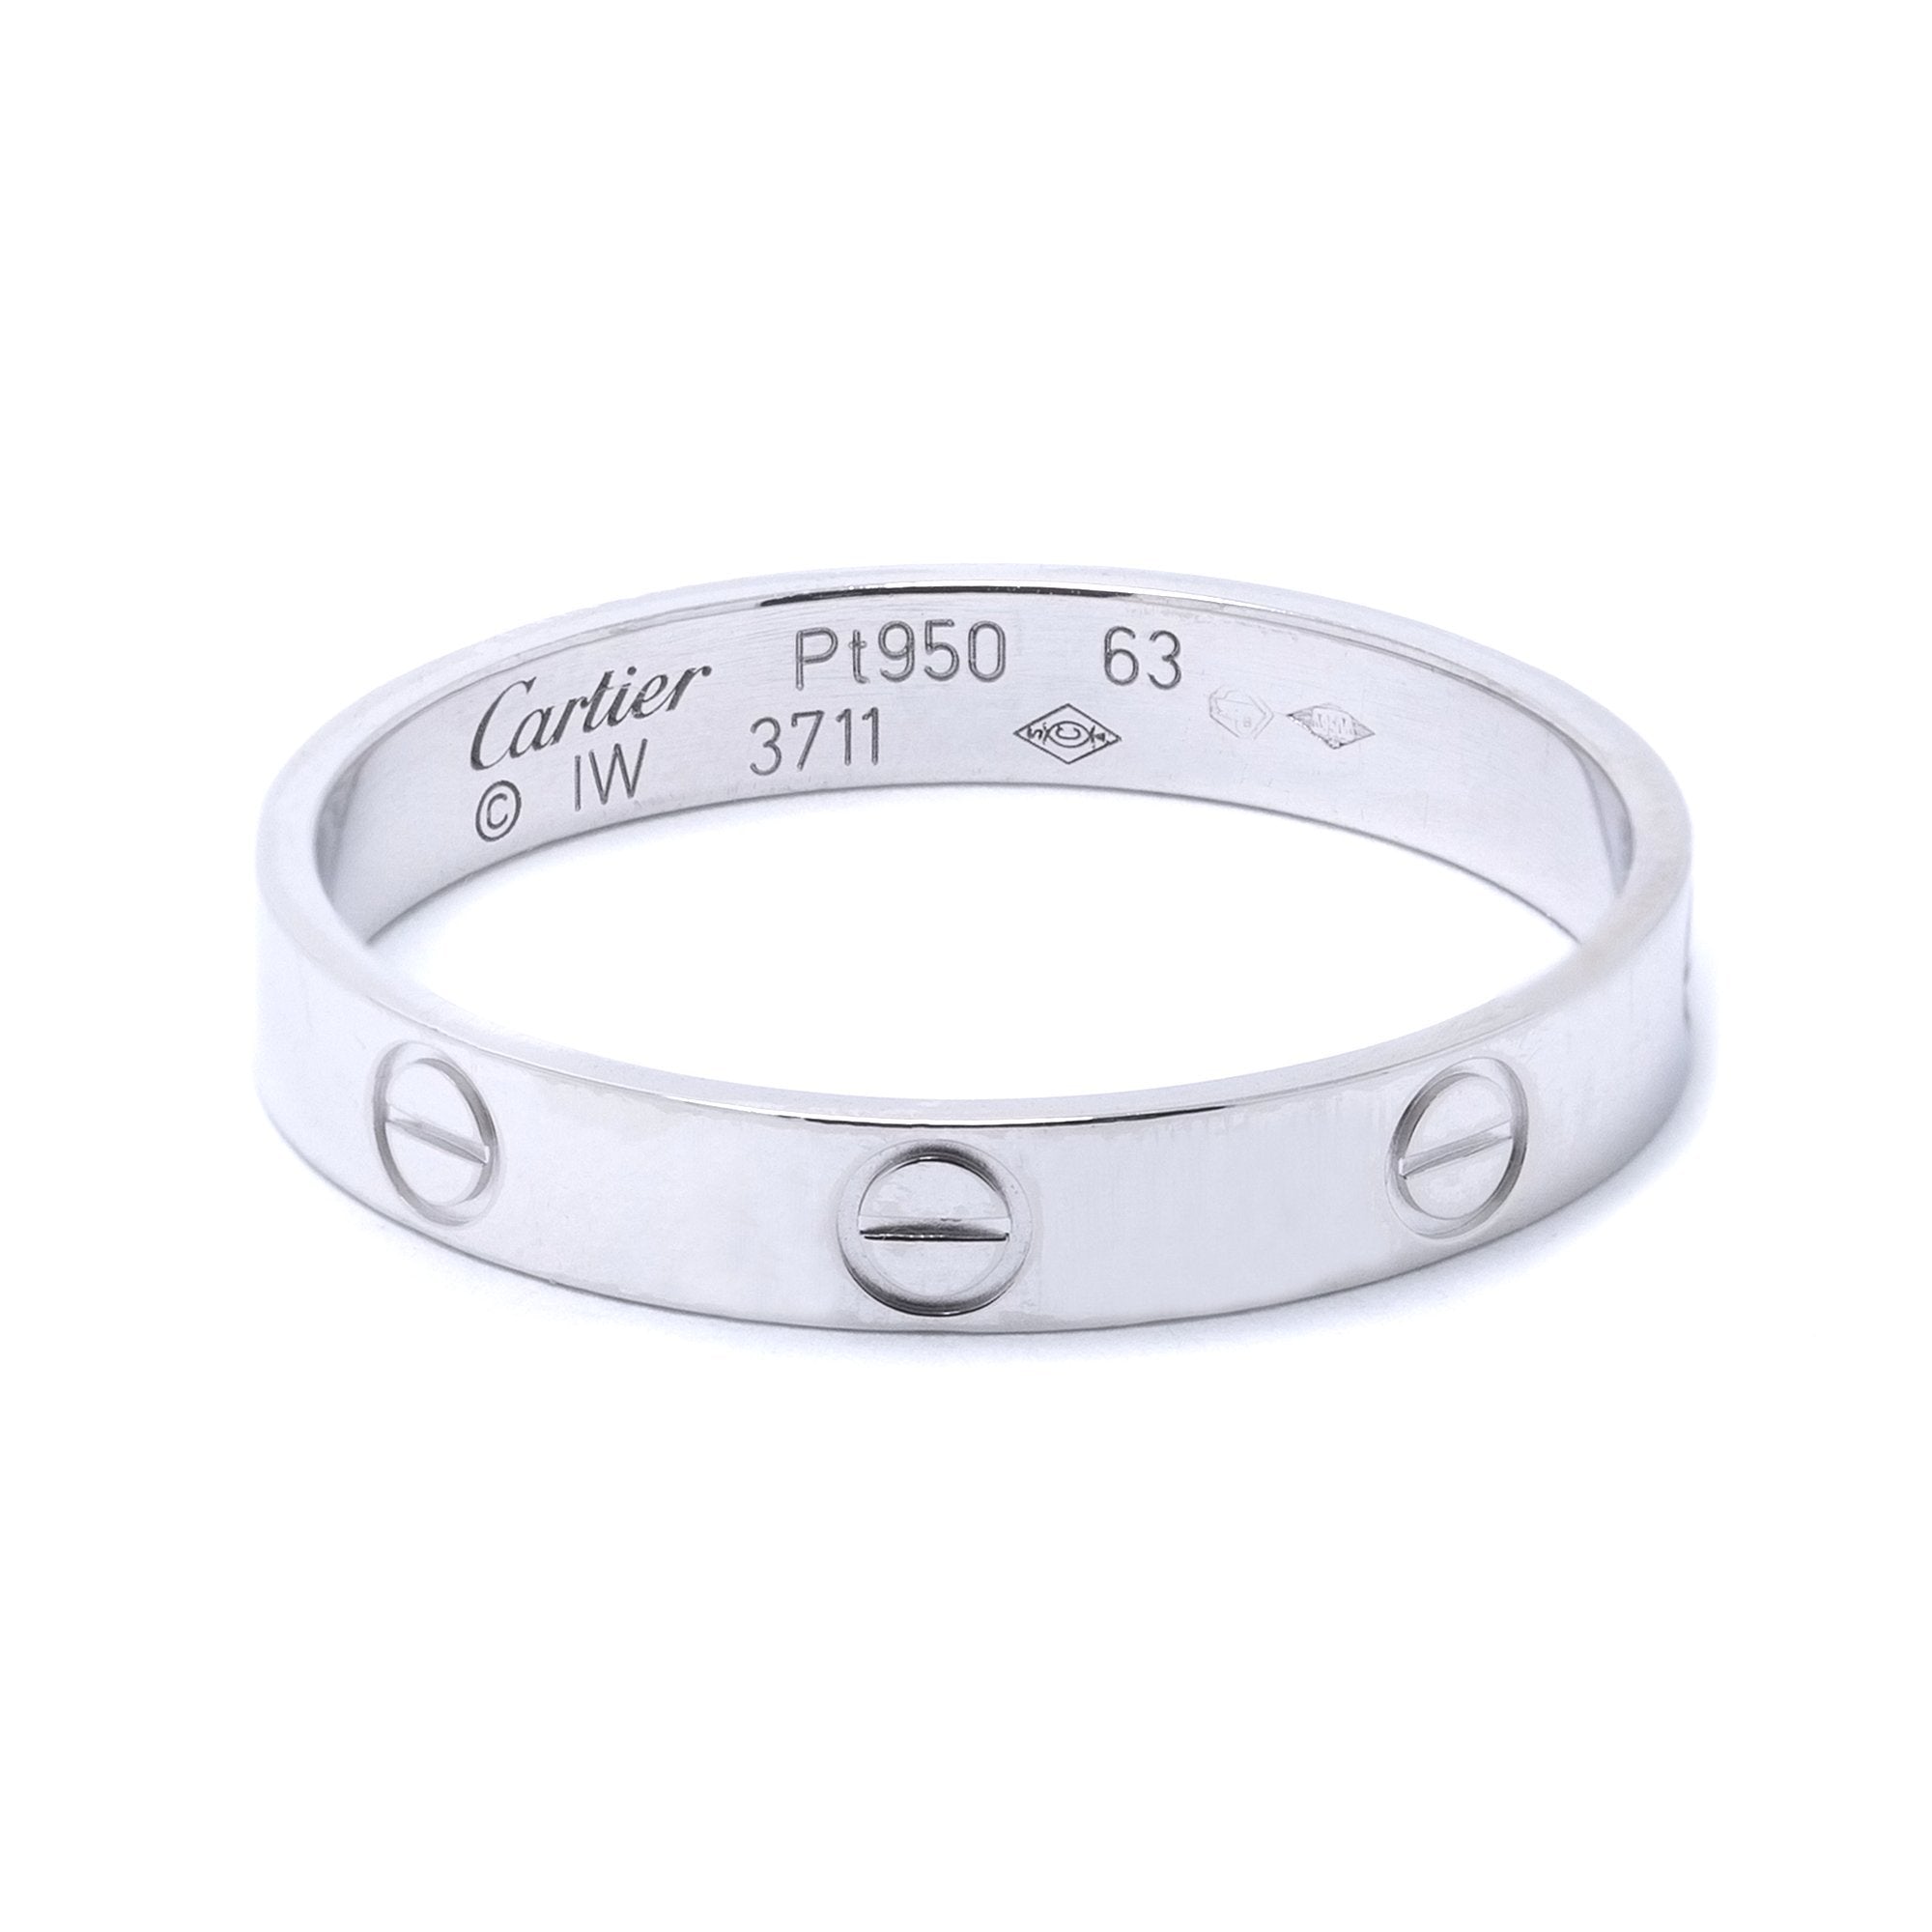 Cartier Wedding Rings For Men - Wedding Rings Sets Ideas